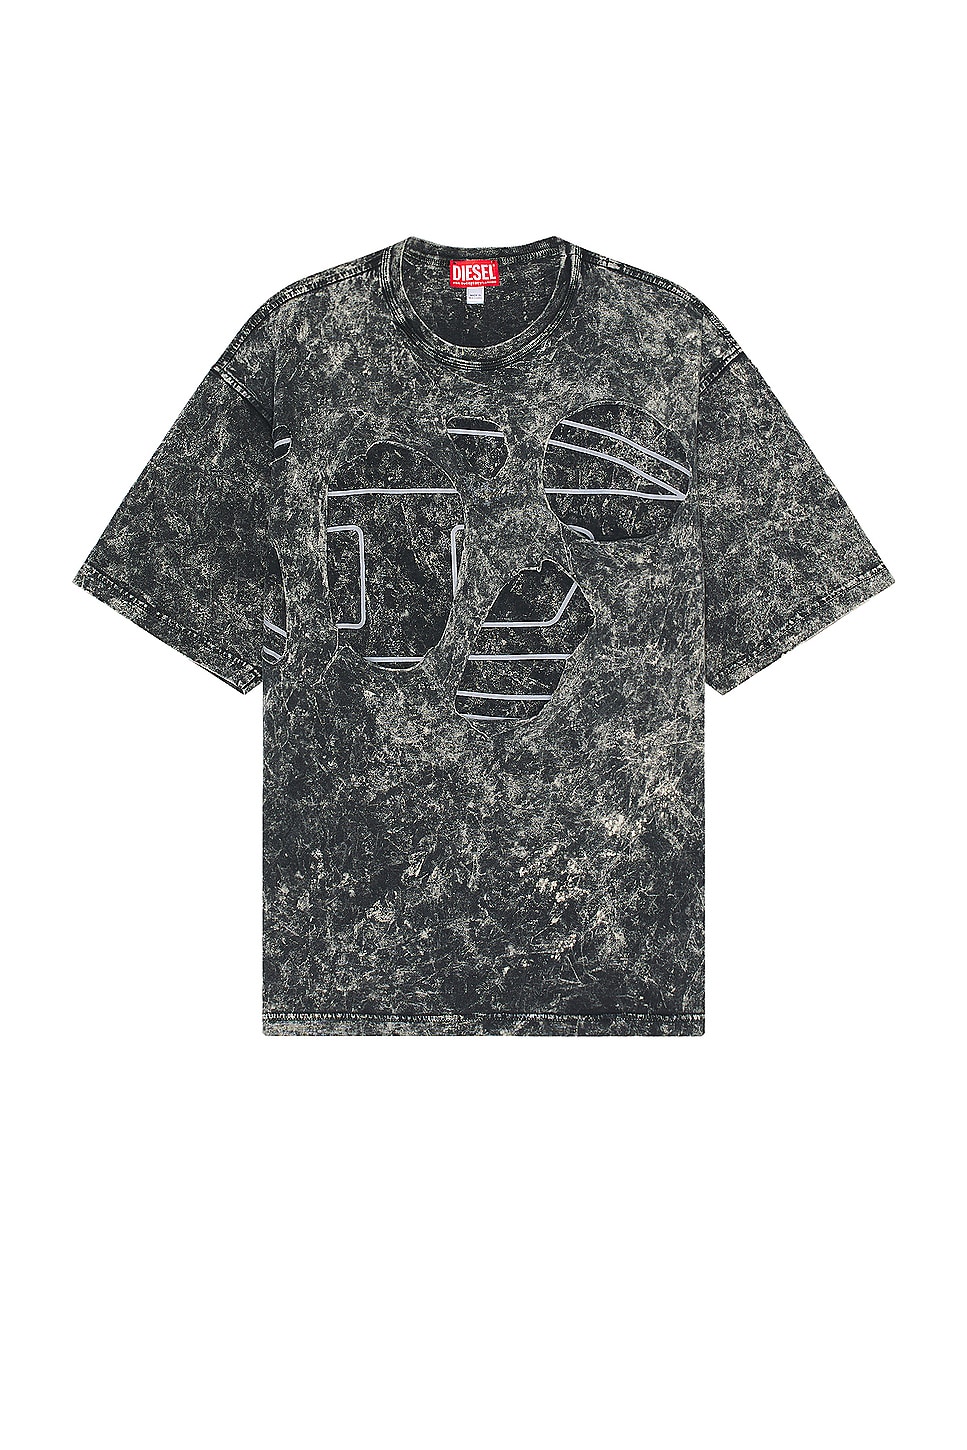 Image 1 of Diesel Boxt Peel Oval T-shirt in Deep & Black